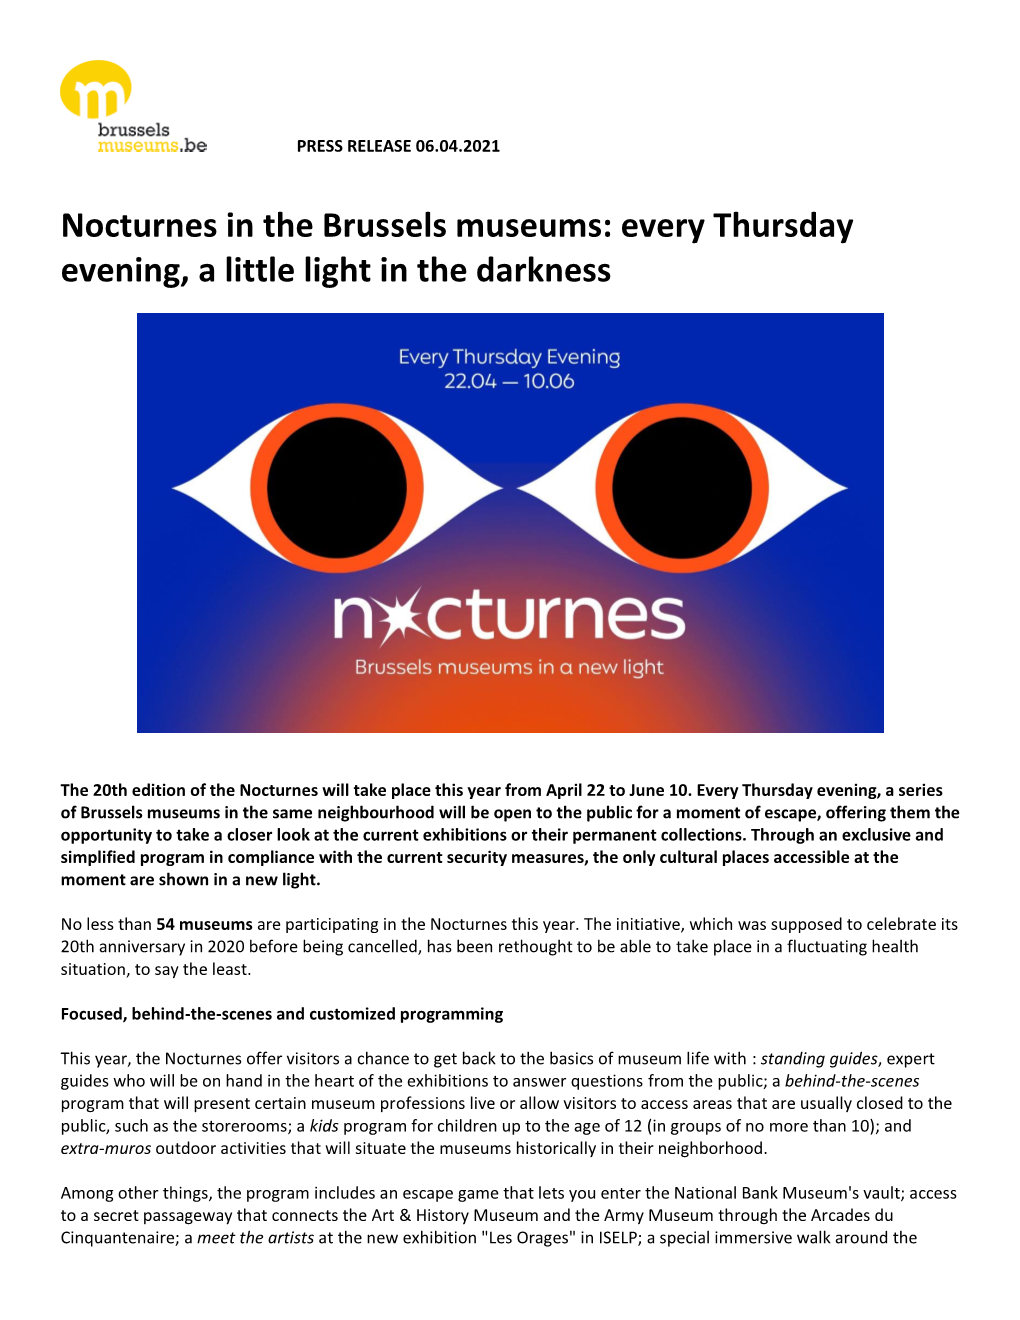 Nocturnes 2021 Press Releas